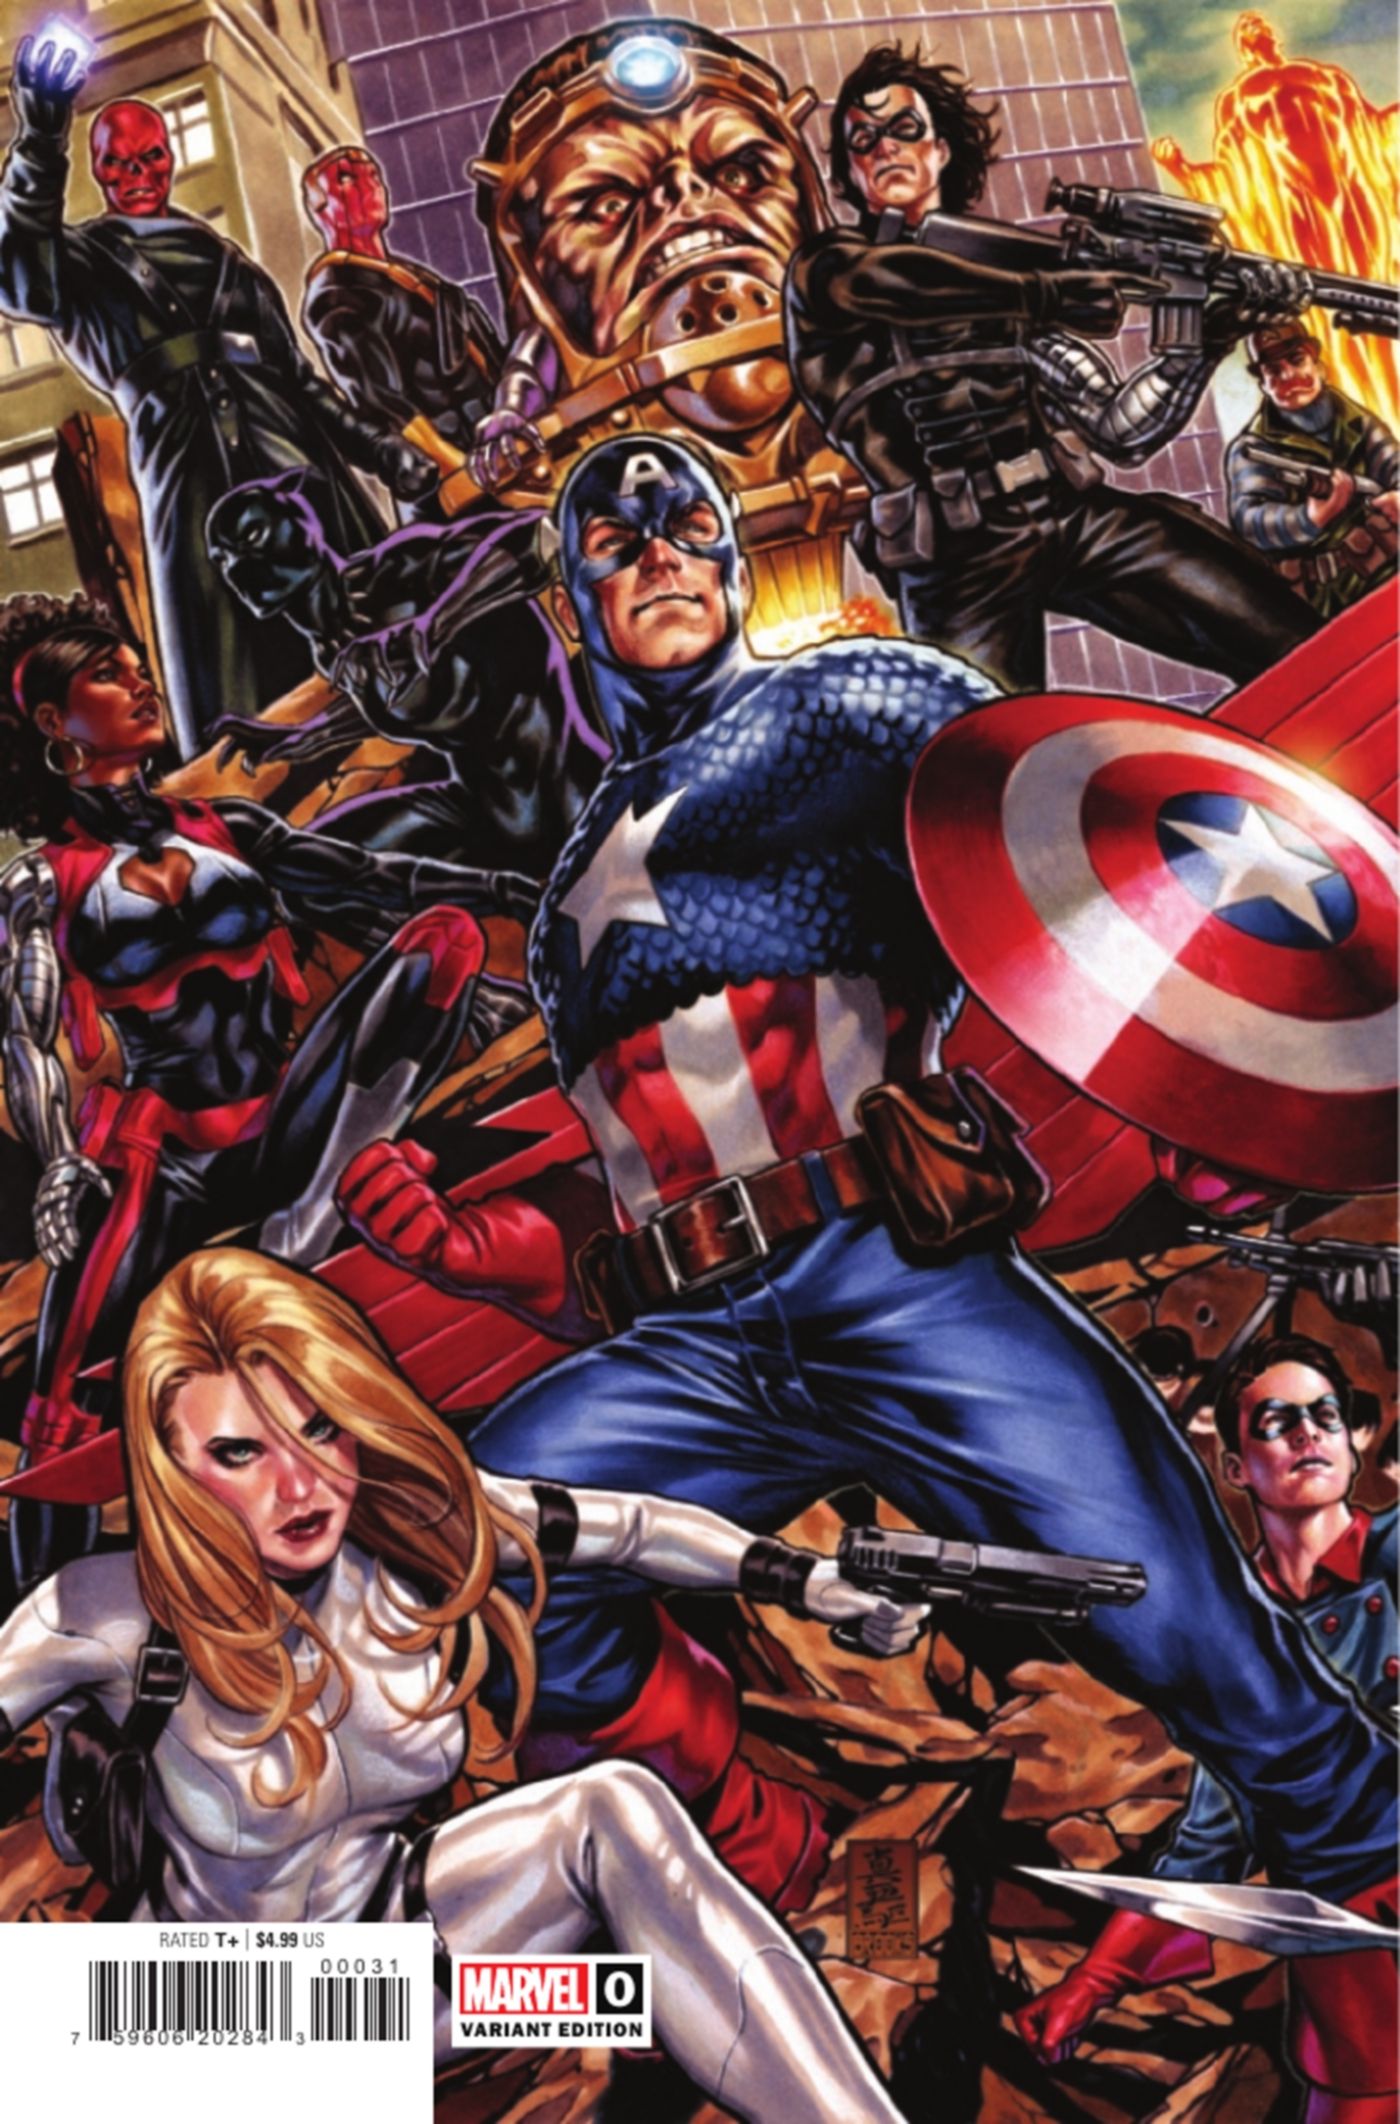 New Captain America Recreates Iconic Meme with Steve Rogers